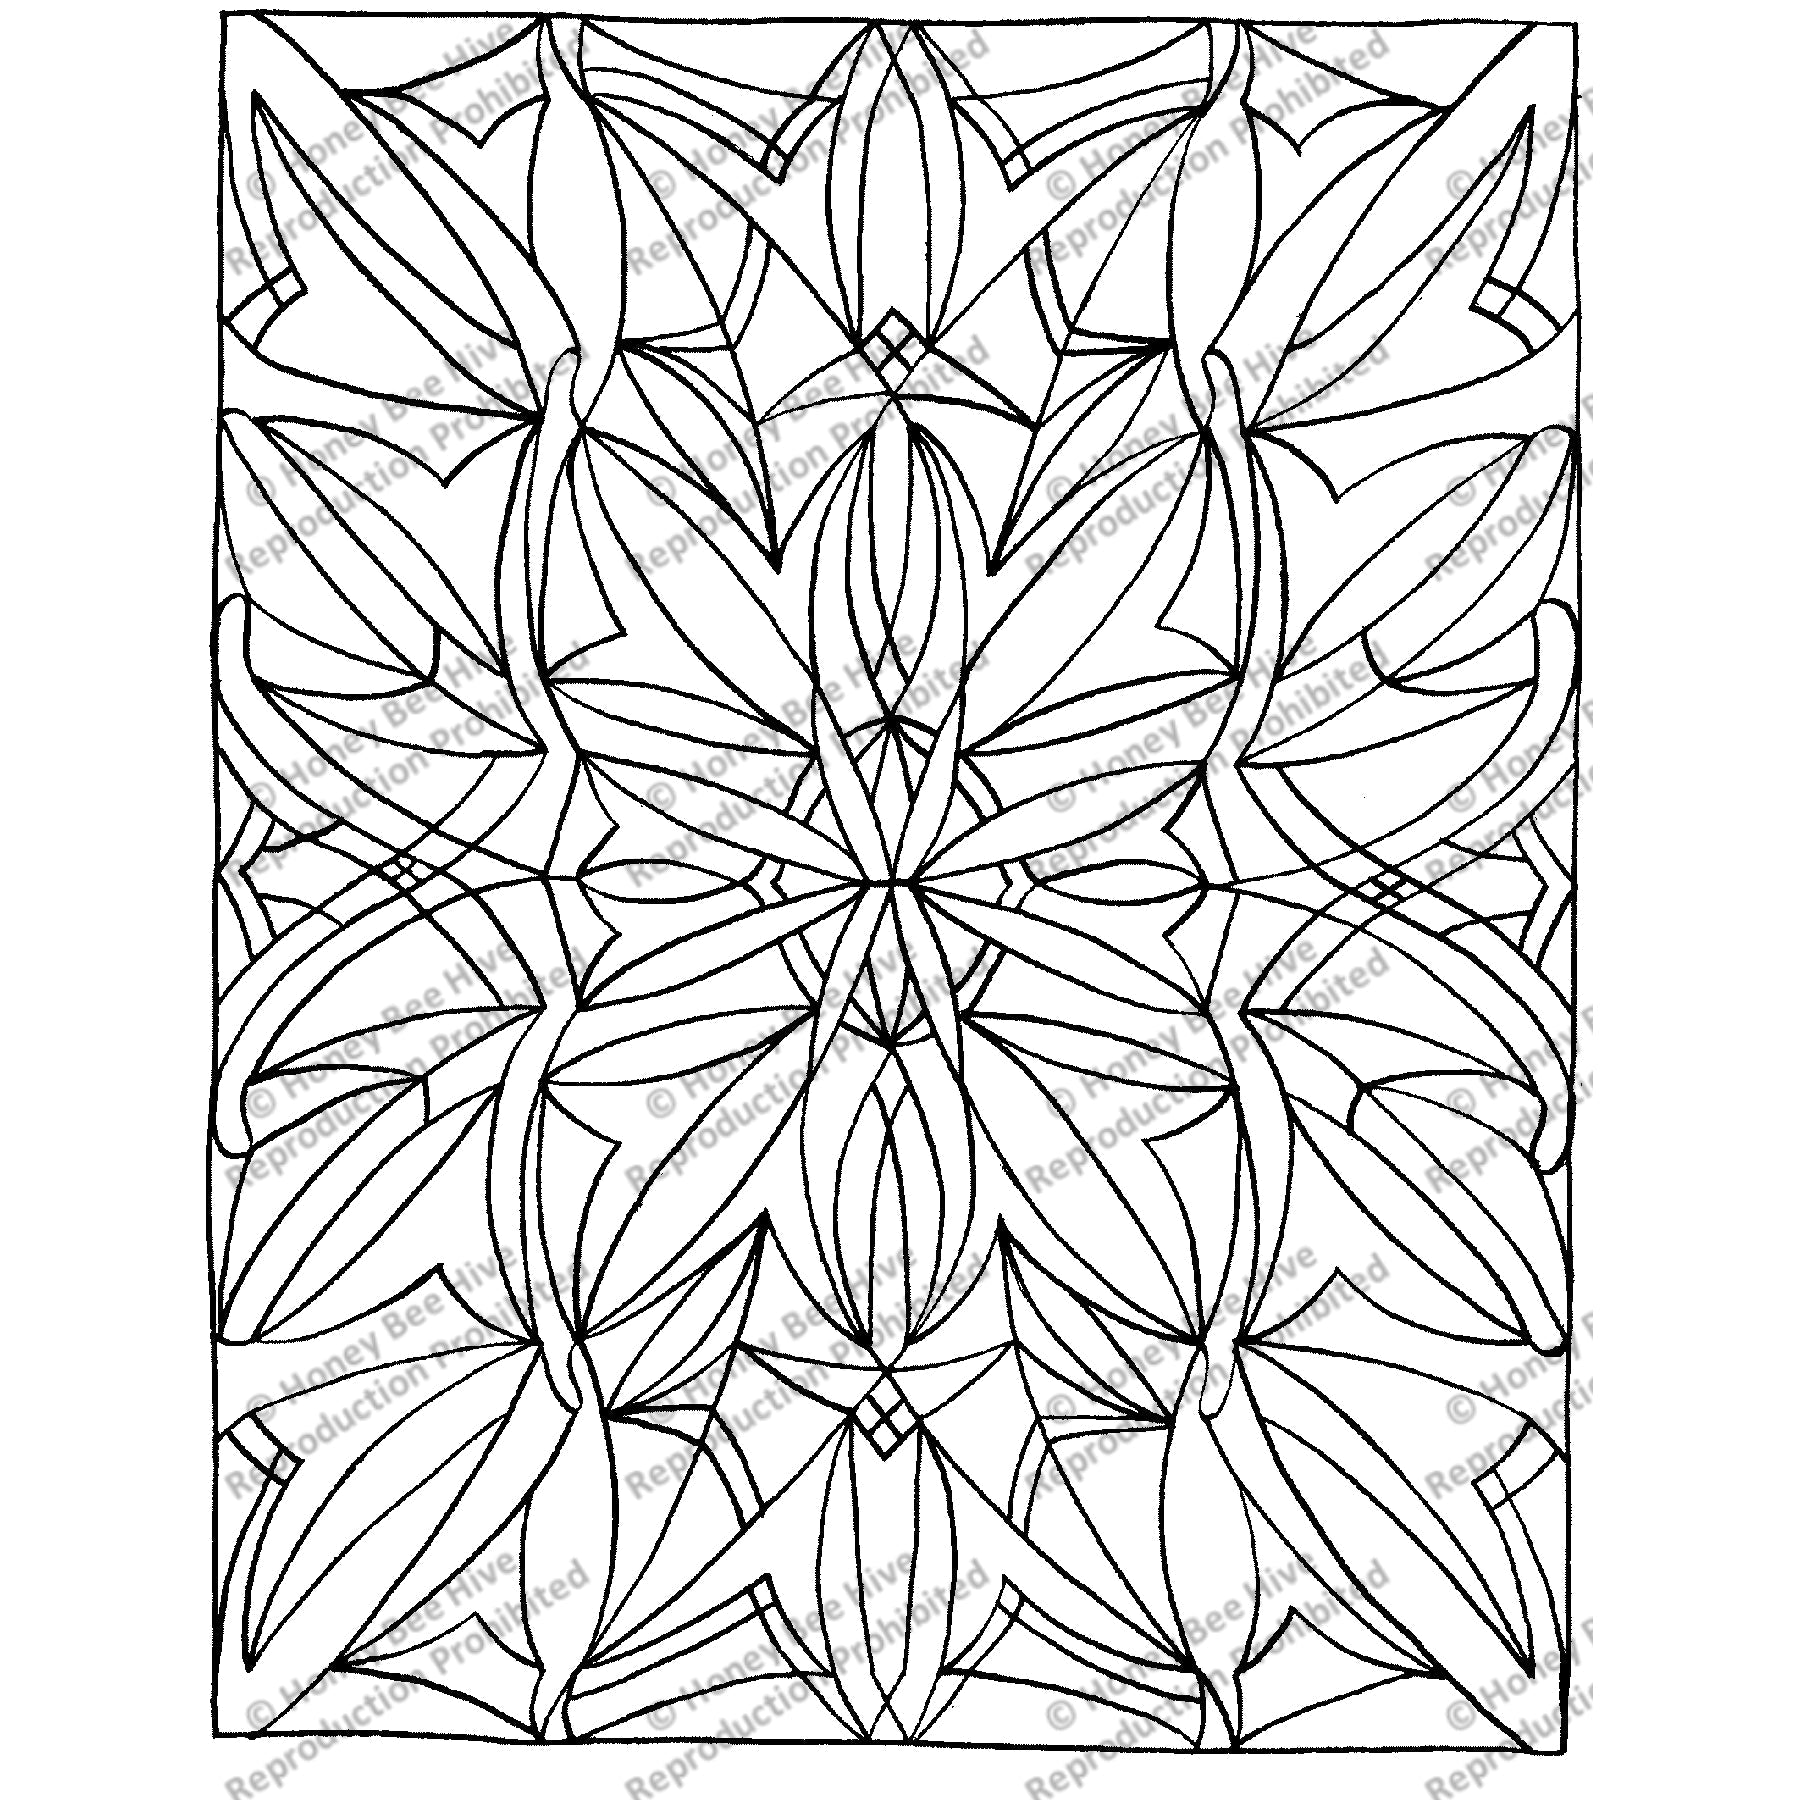 Monarda, rug hooking pattern